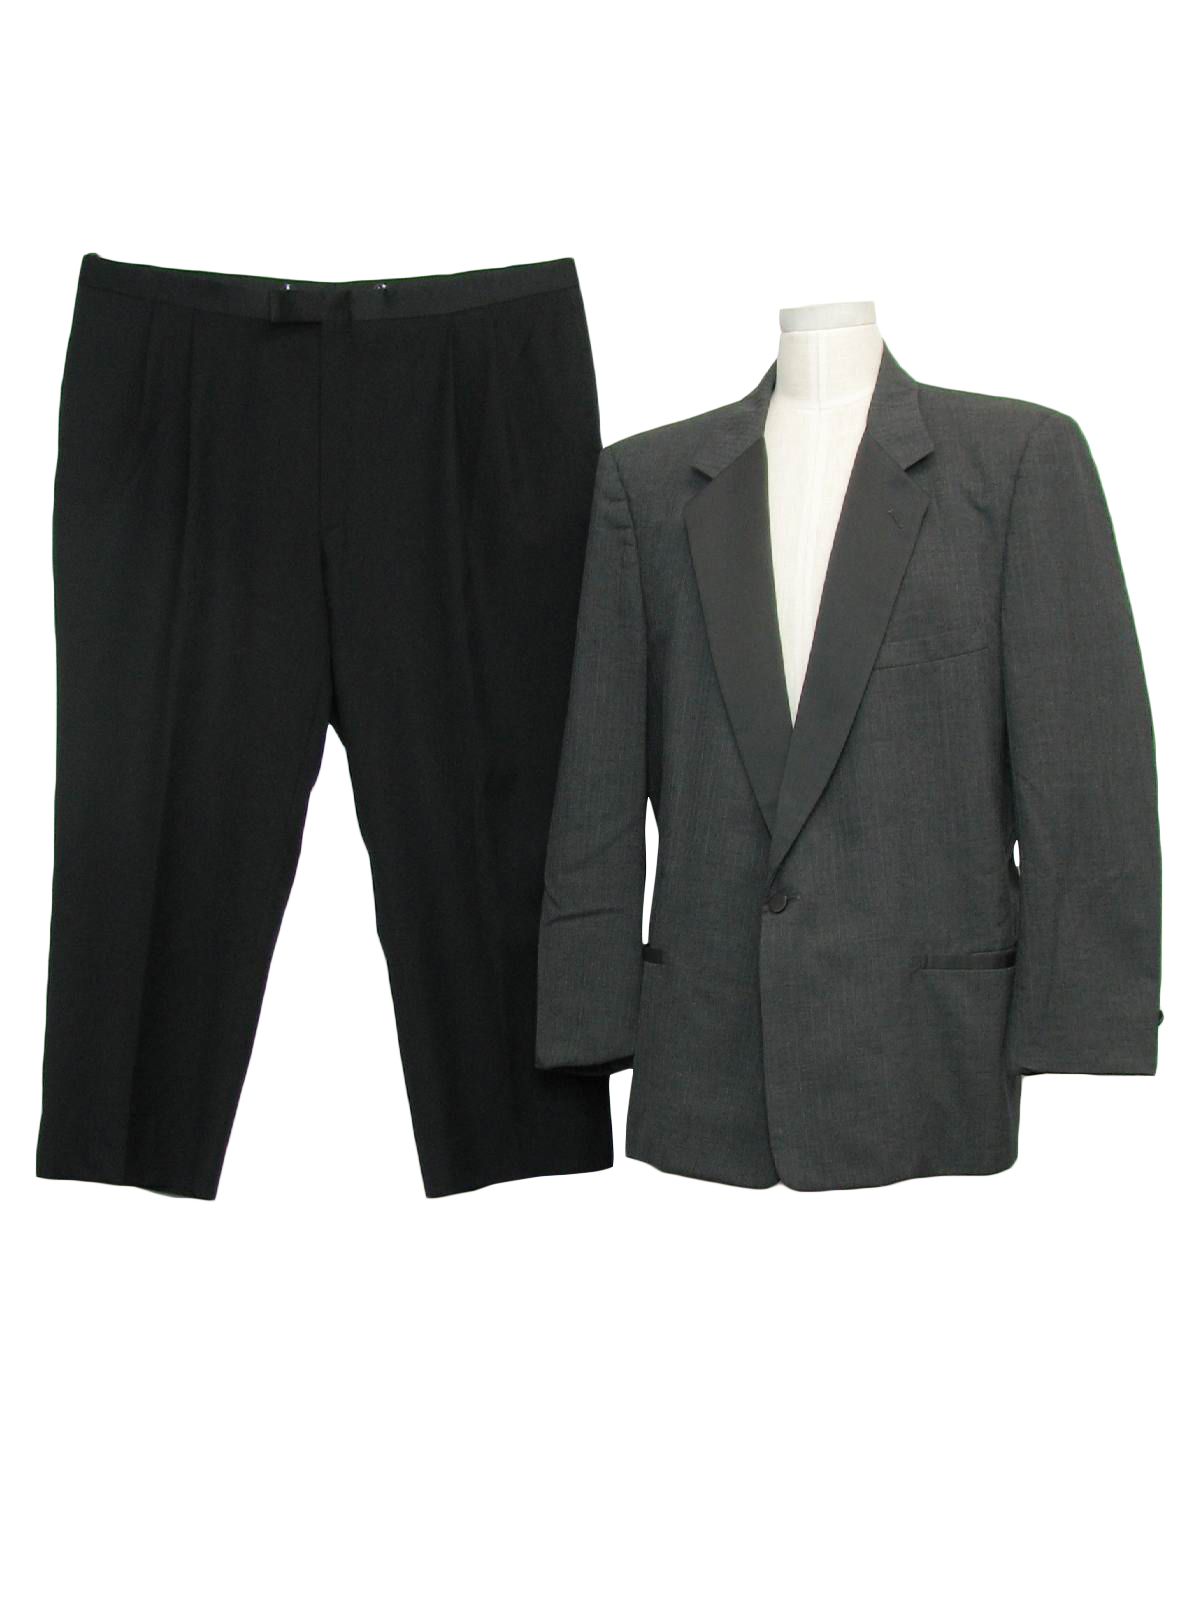 Retro 1980's Suit (Pierre Cardin) : 80s -Pierre Cardin- Mens two piece ...